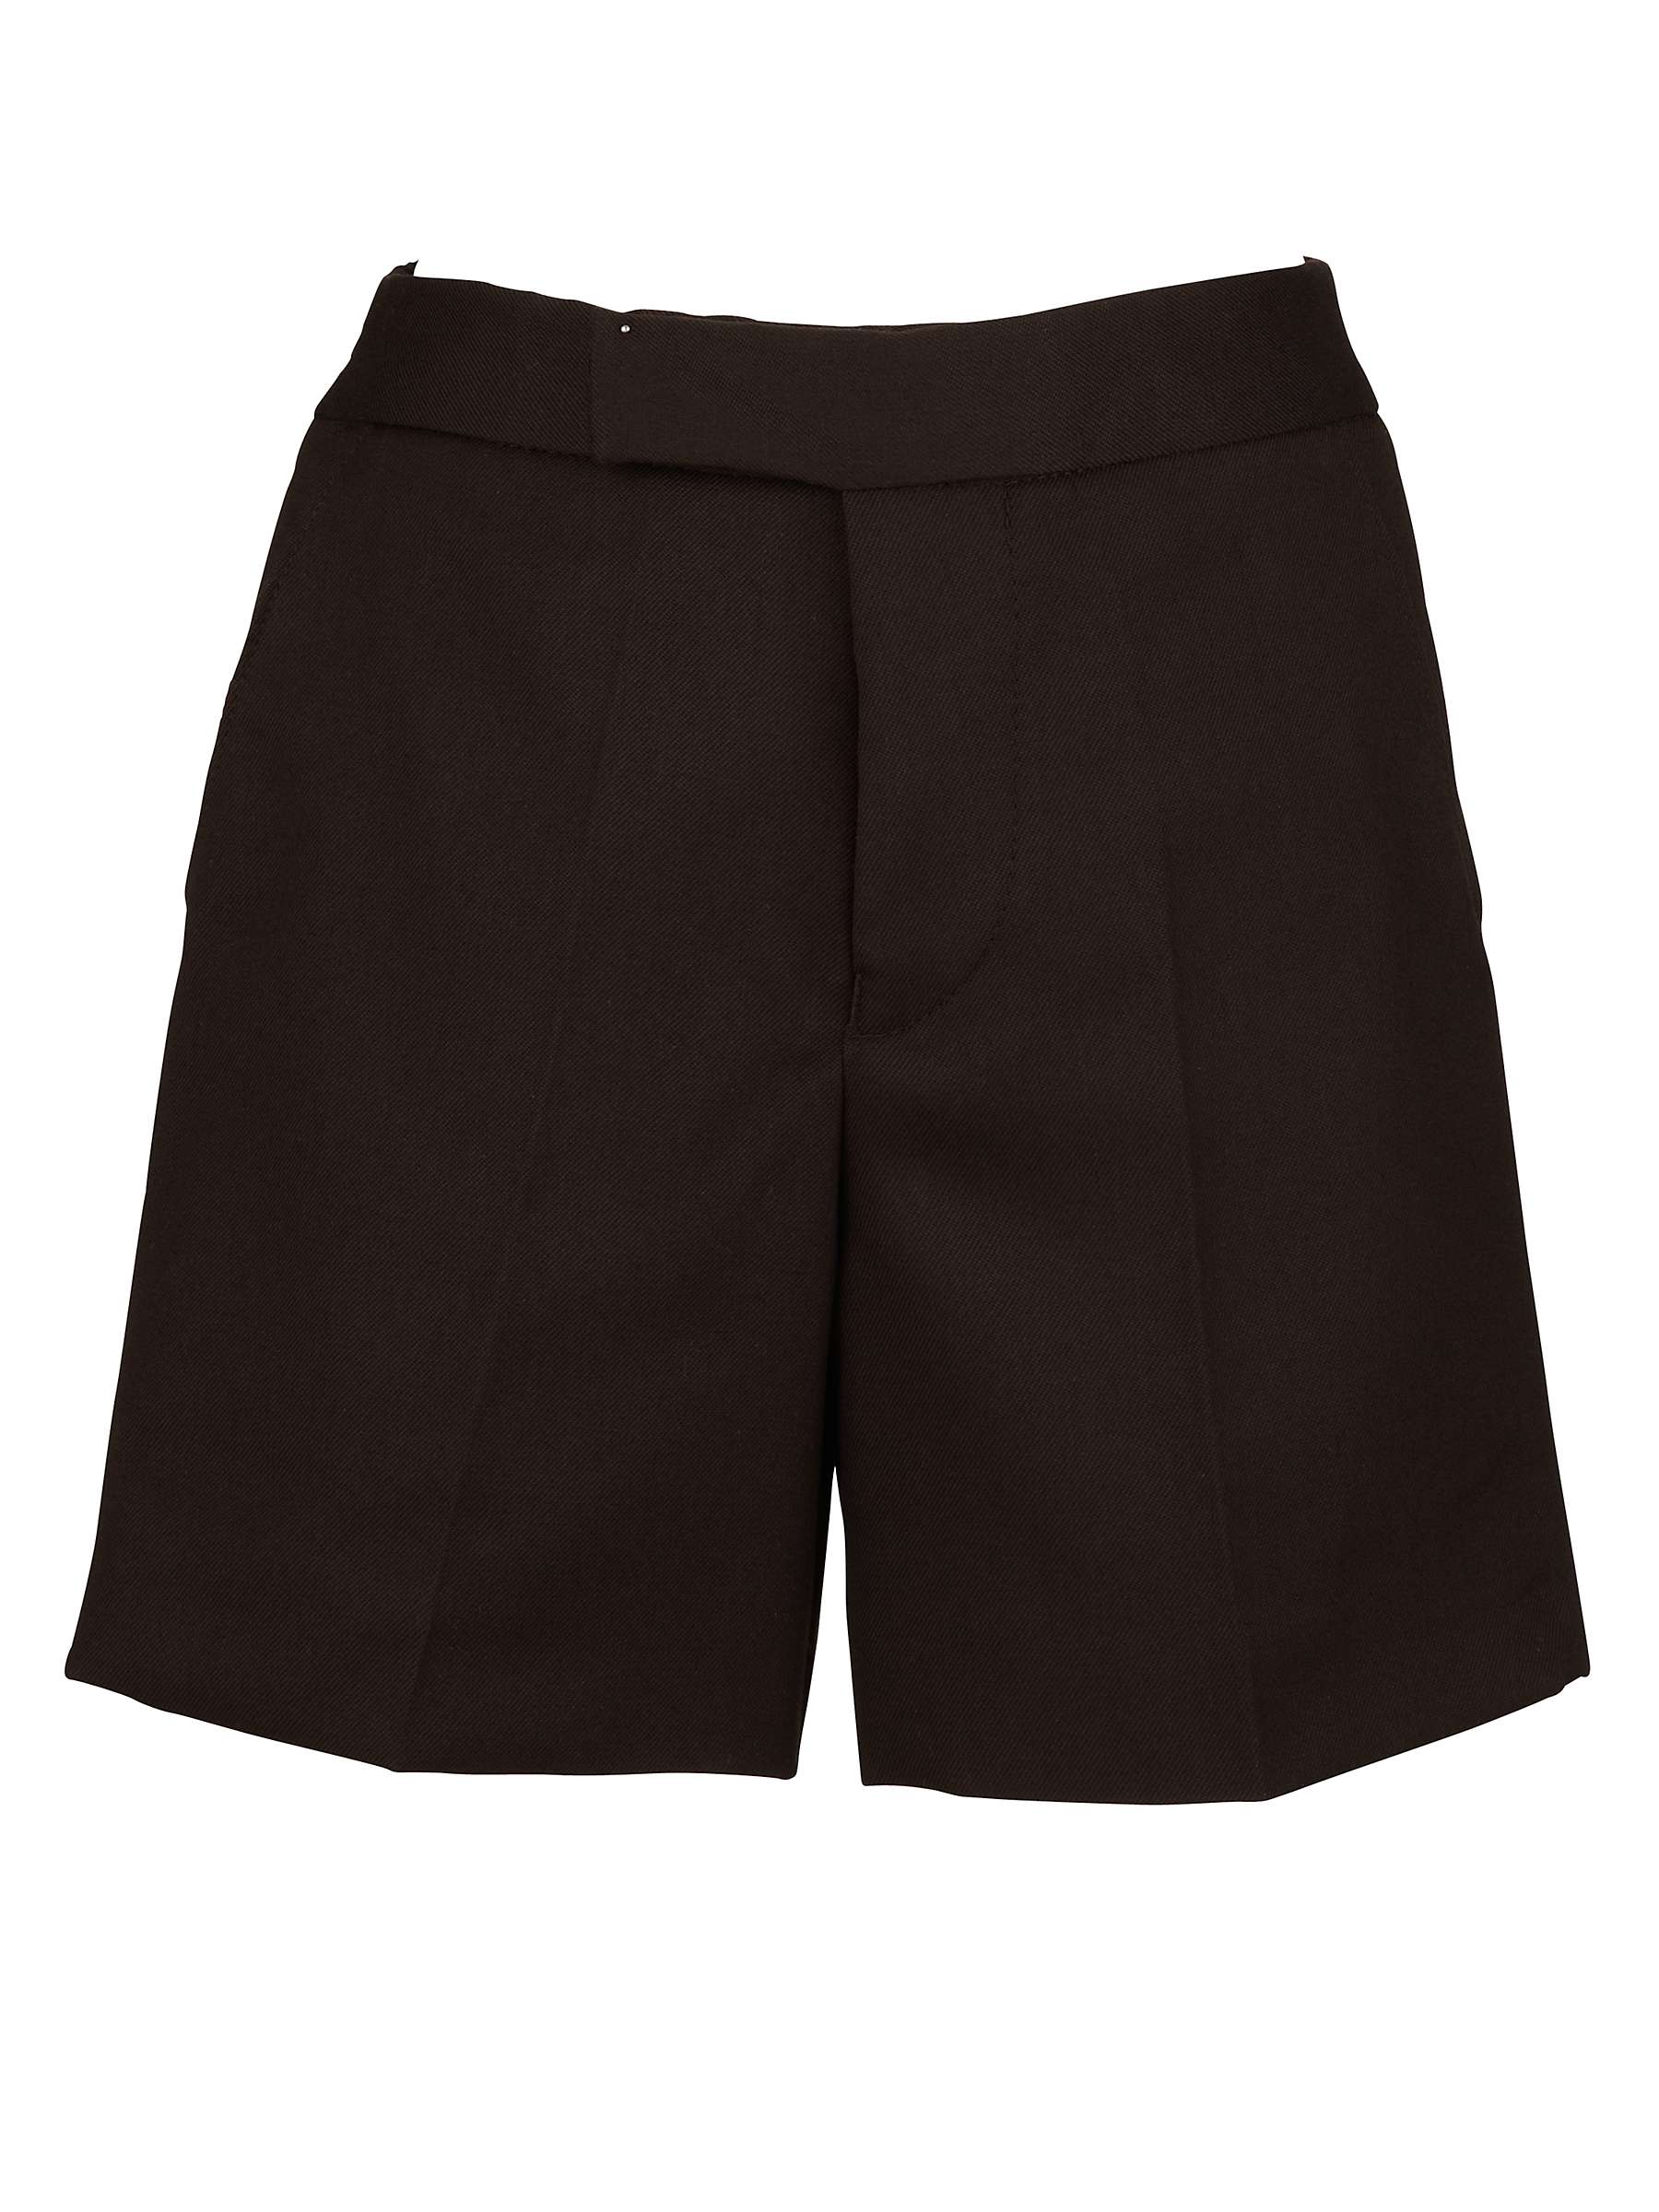 Buy Boys' School Shorts, Brown Online at johnlewis.com